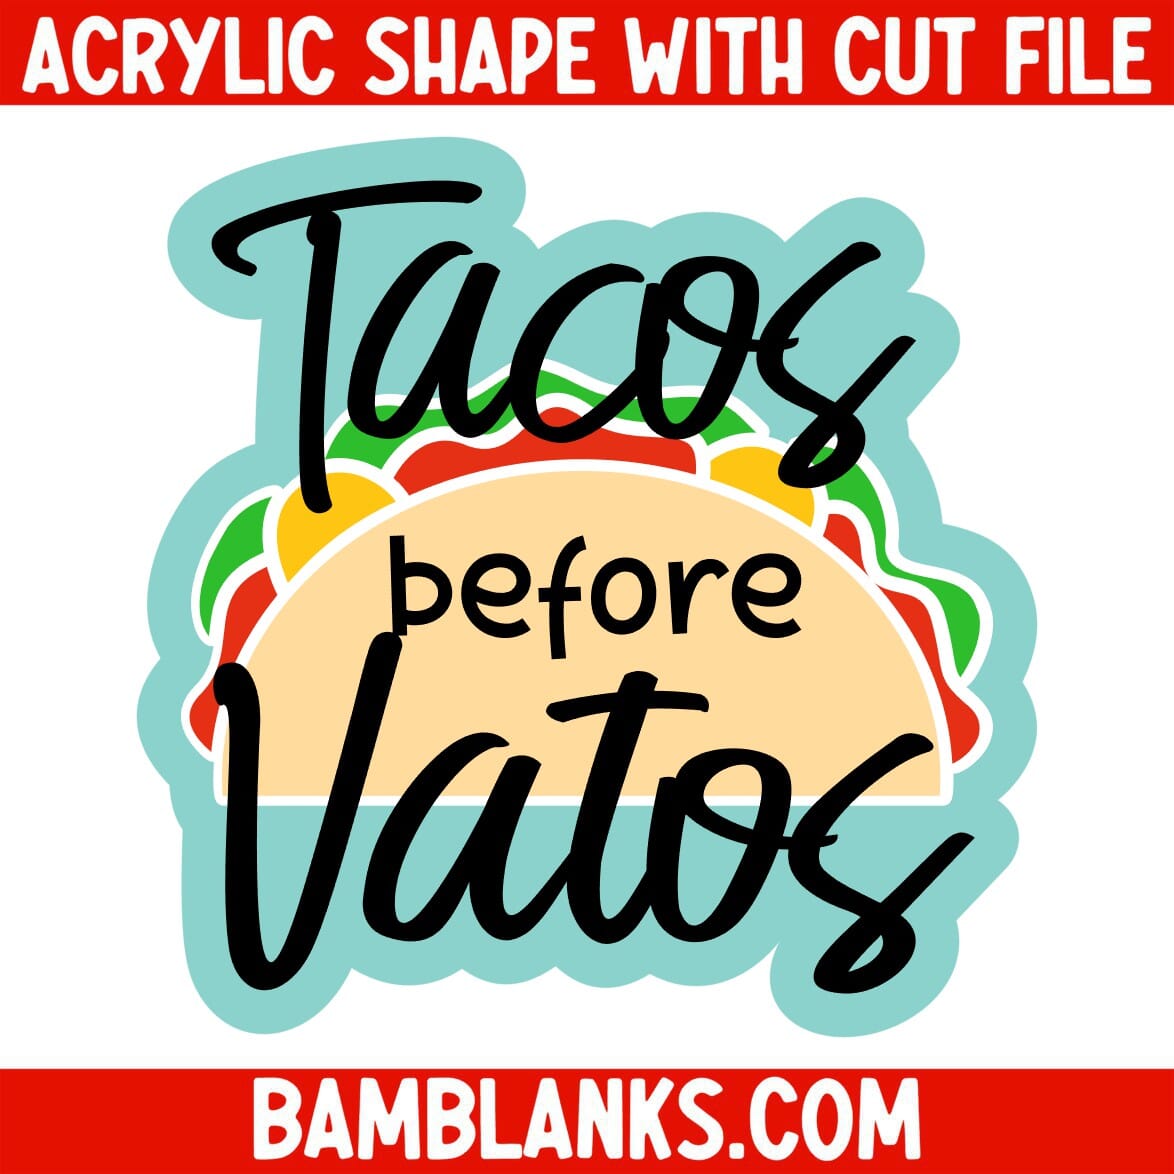 Tacos Before Vatos - Acrylic Shape #1130